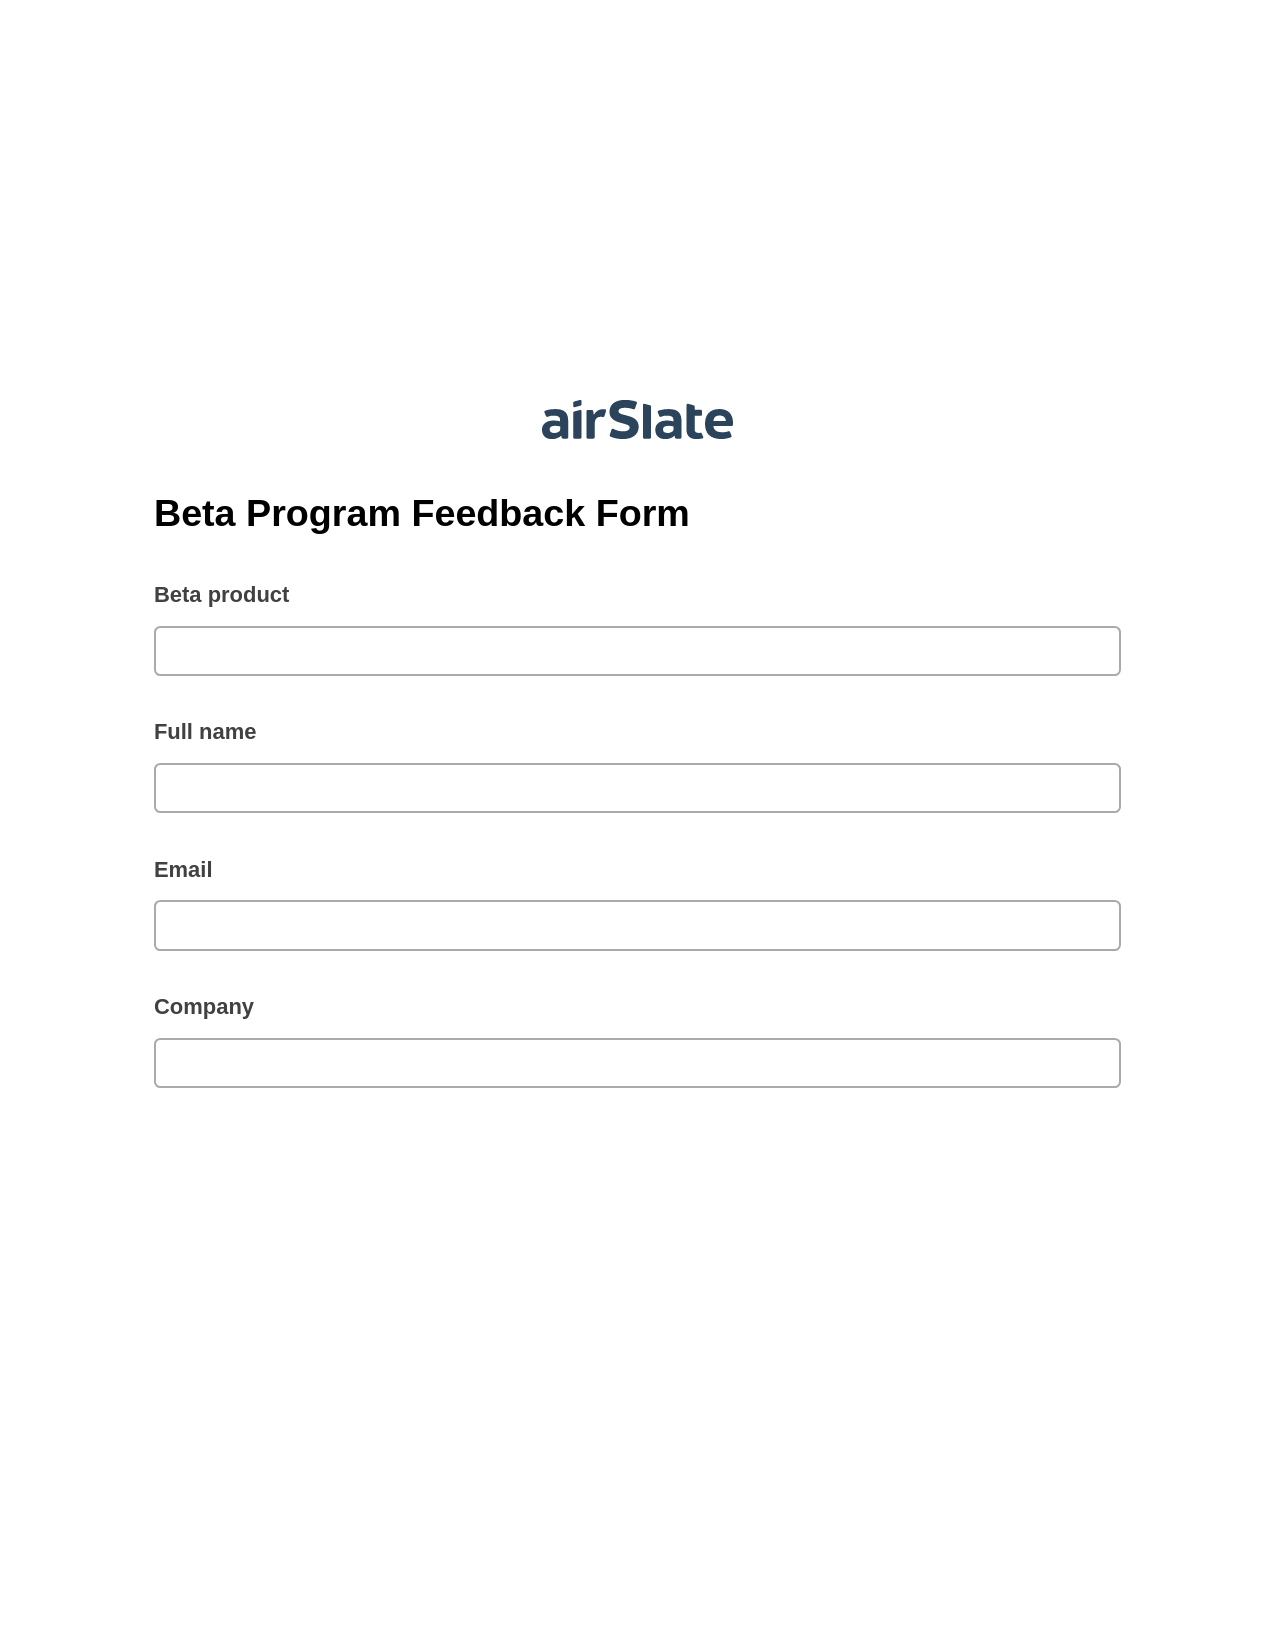 Beta Program Feedback Form Pre-fill Dropdowns from Excel Bot, Reminder Bot, Google Drive Bot